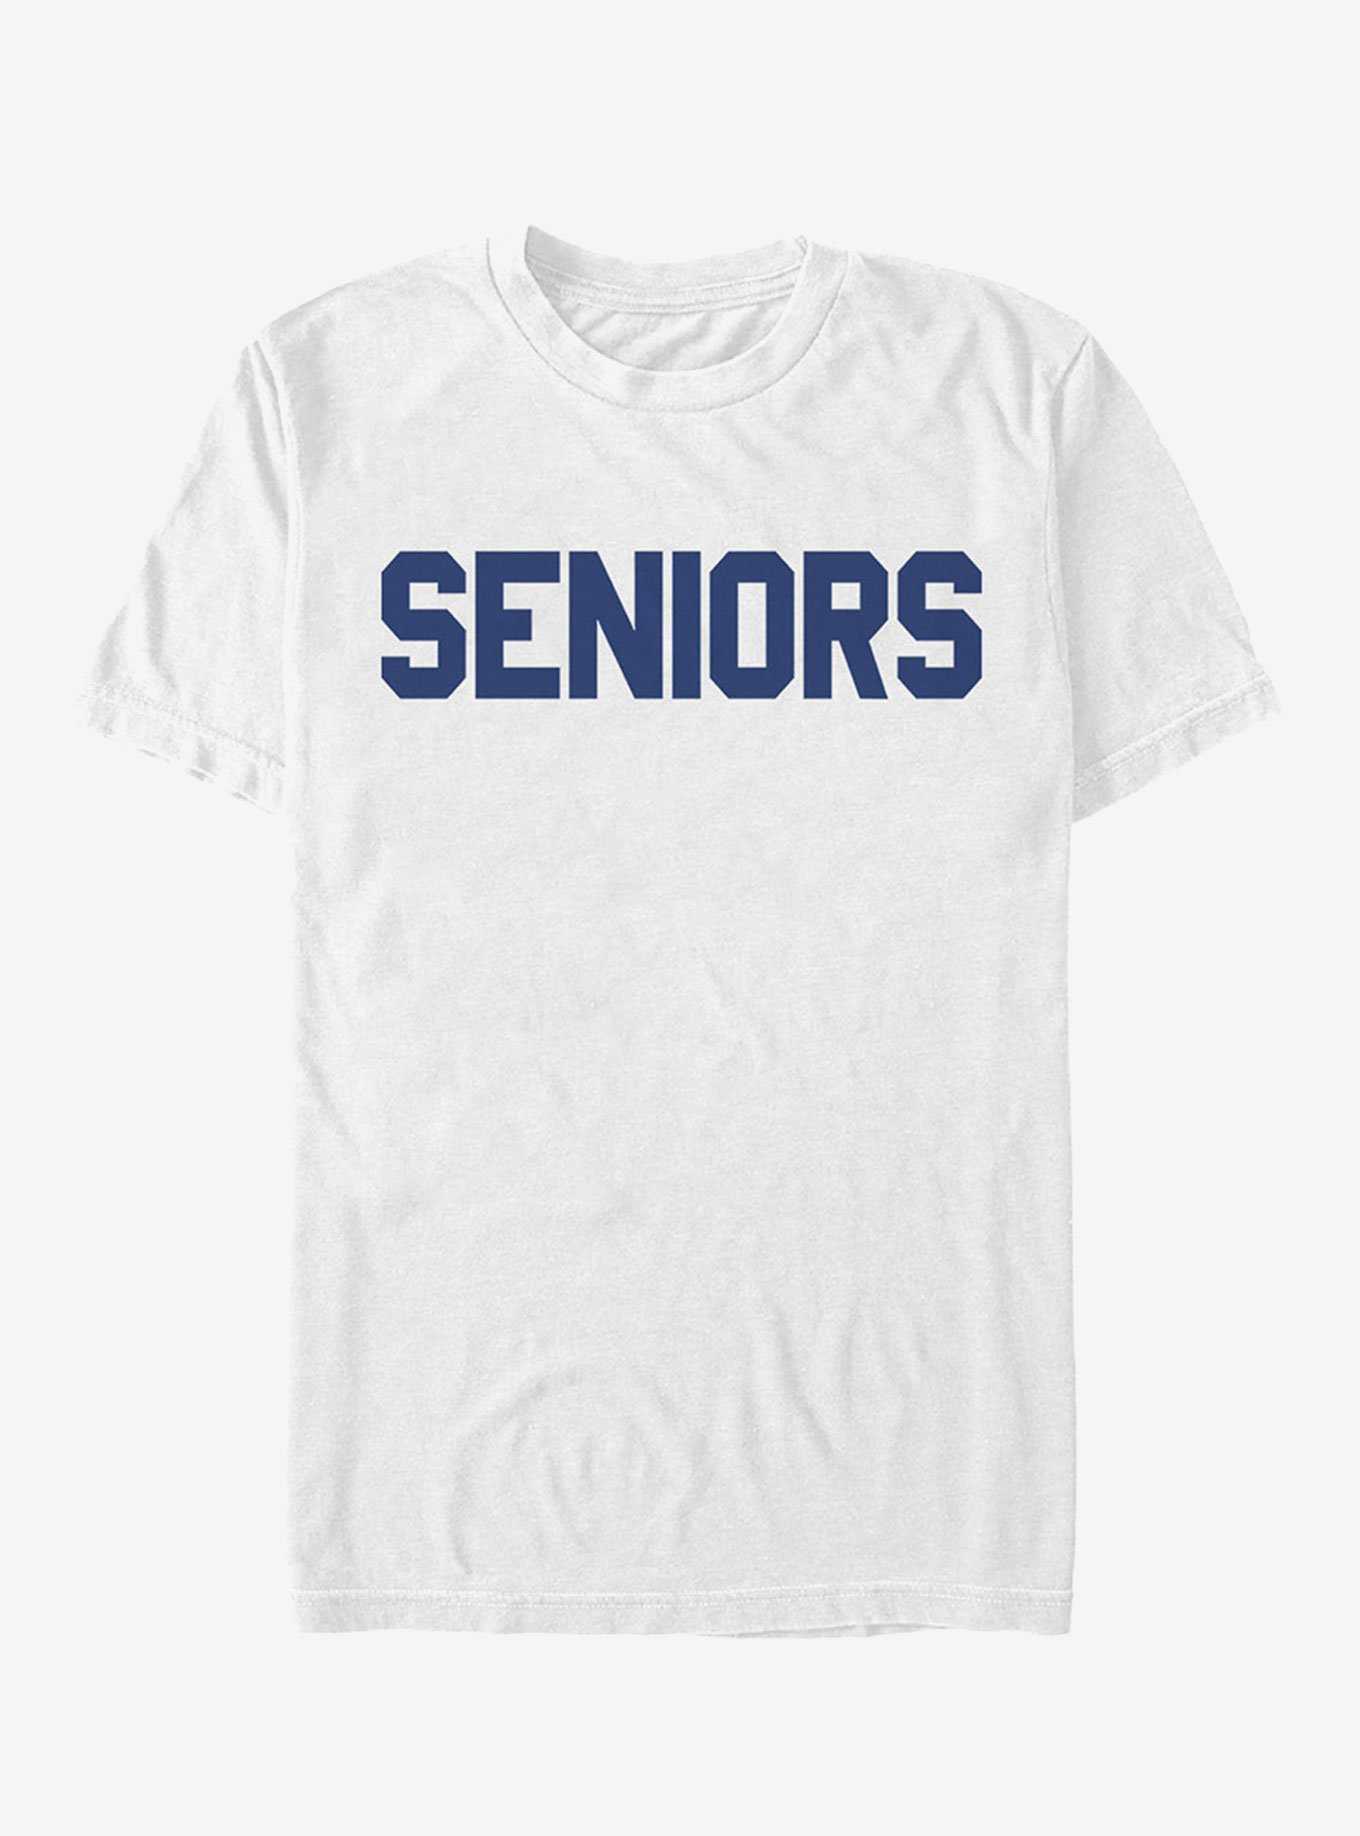 Dazed and Confused Seniors T-Shirt, , hi-res